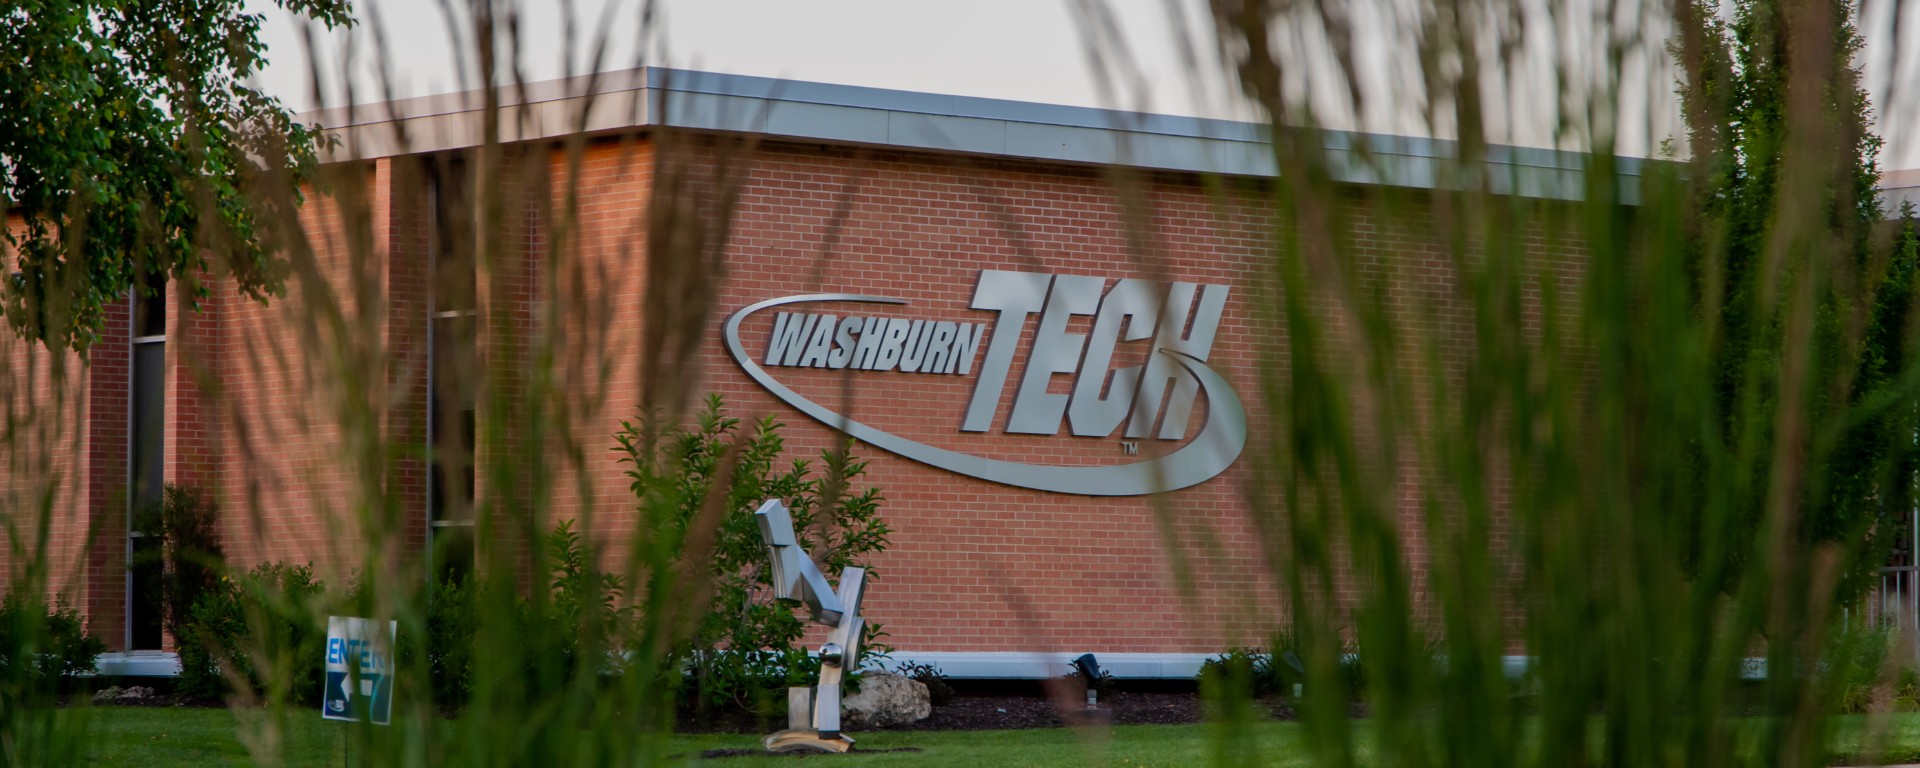 Washburn Tech building at sunset